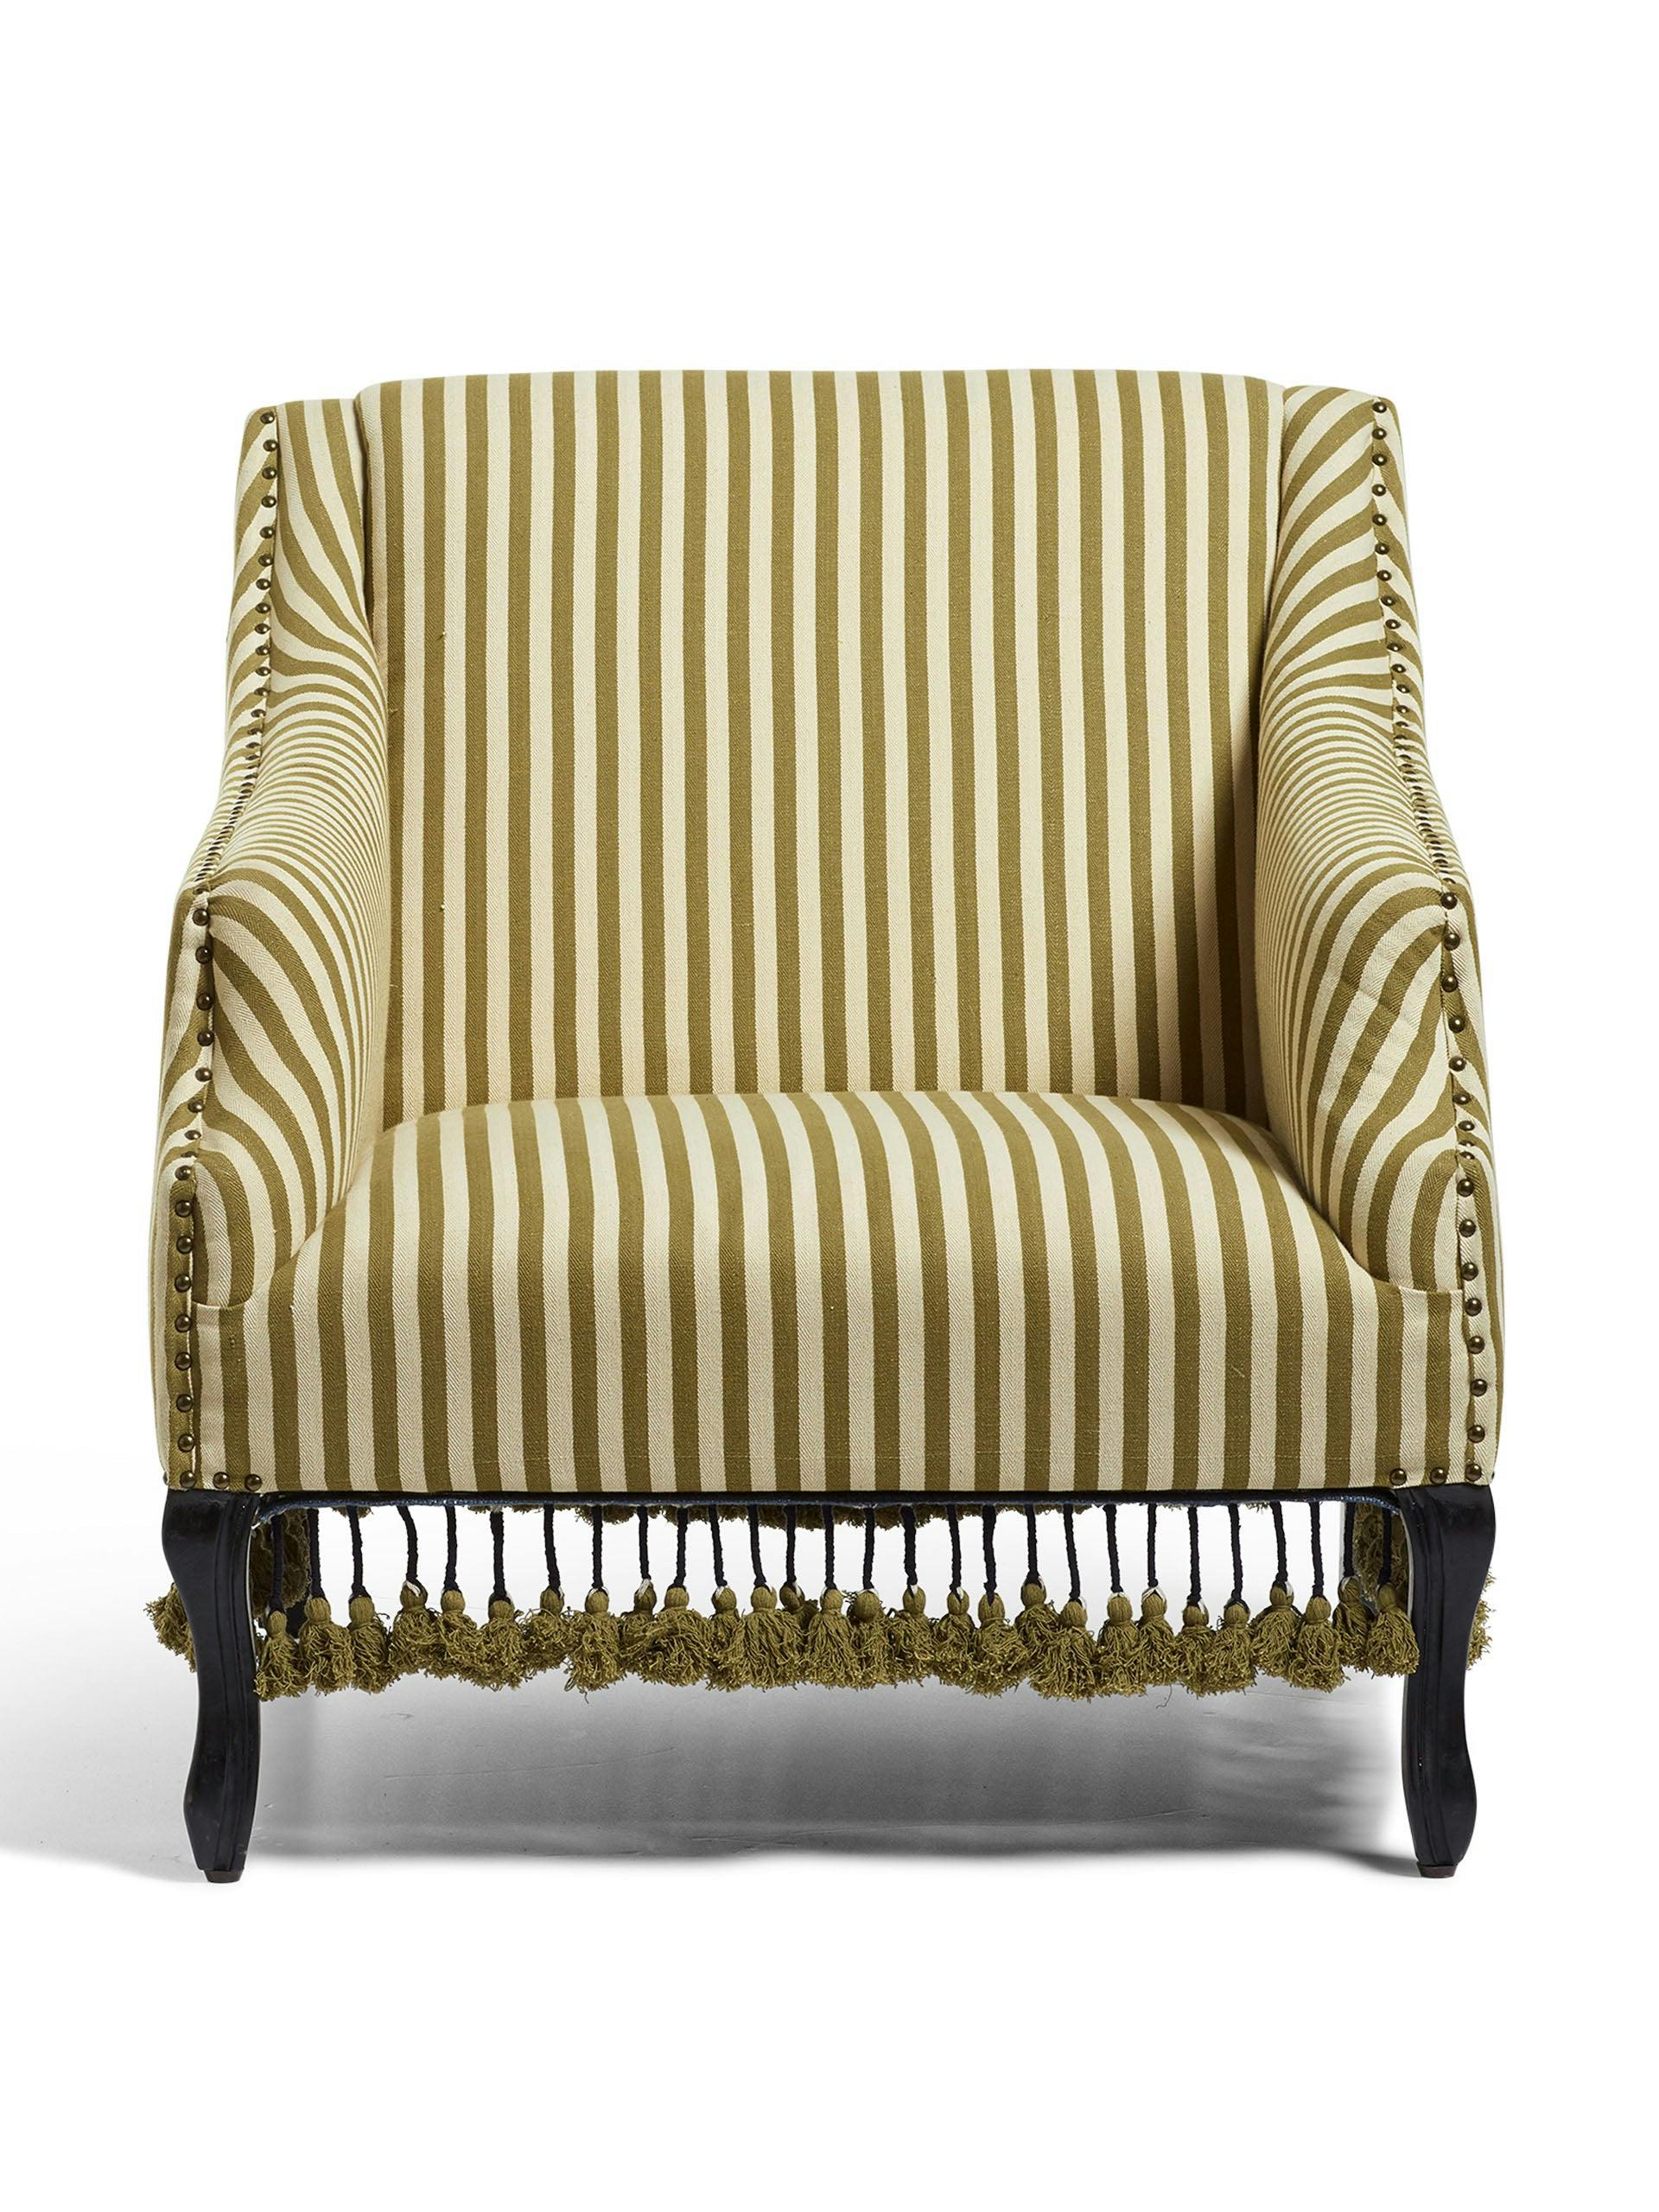 Tarma striped green armchair